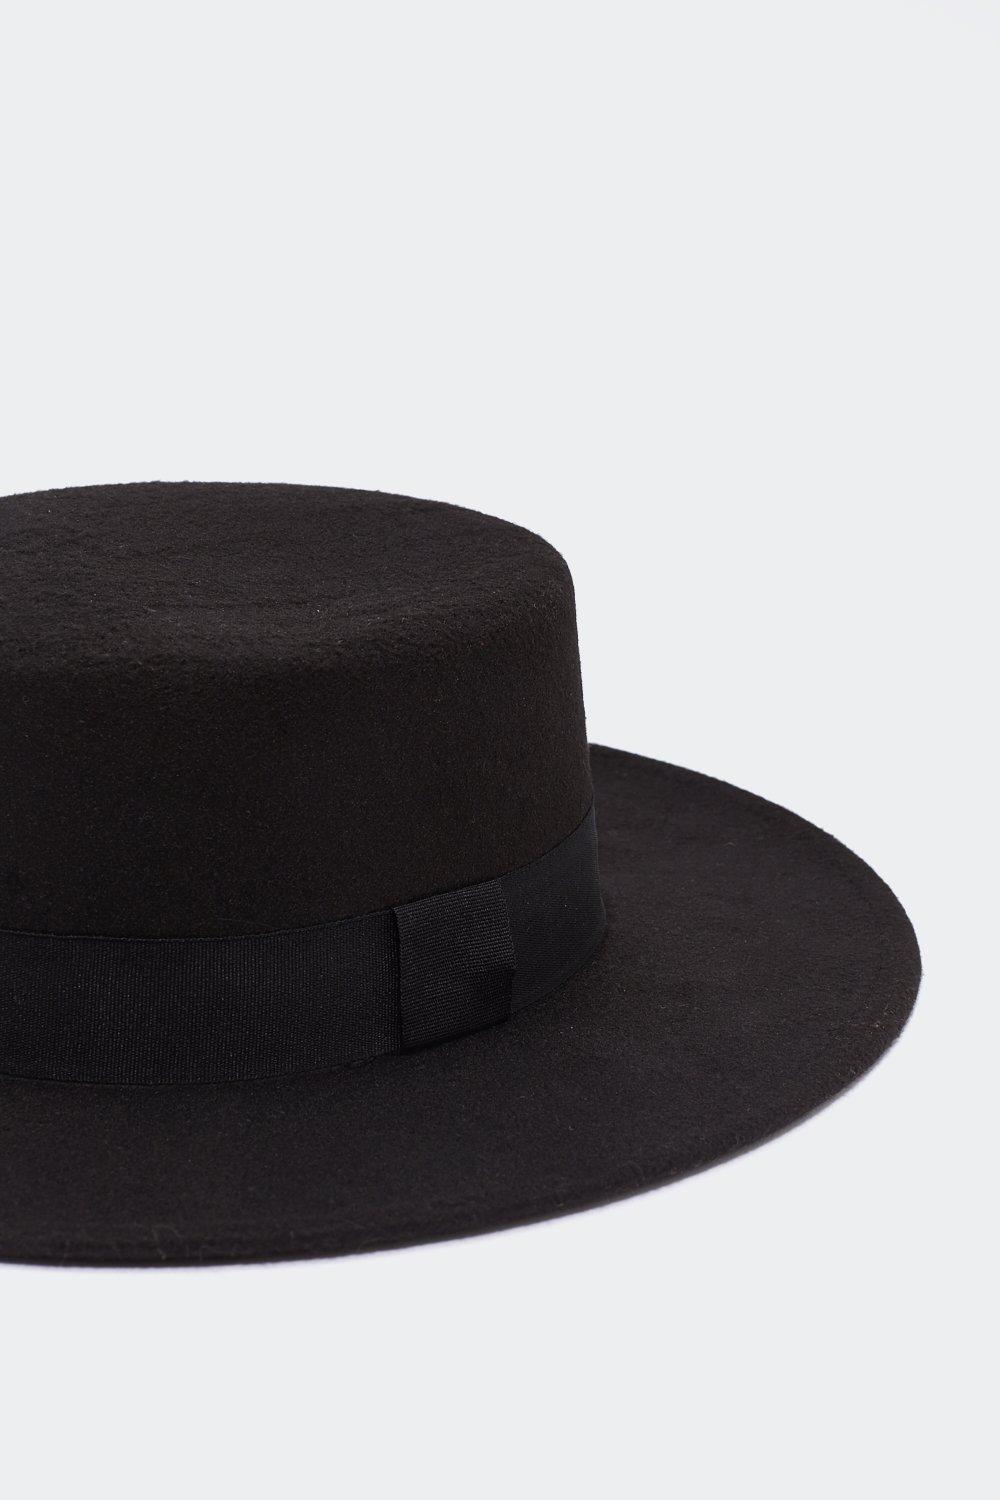 https://media.nastygal.com/i/nastygal/agg82152_black_xl_3/black-flat-top-wide-brim-hat